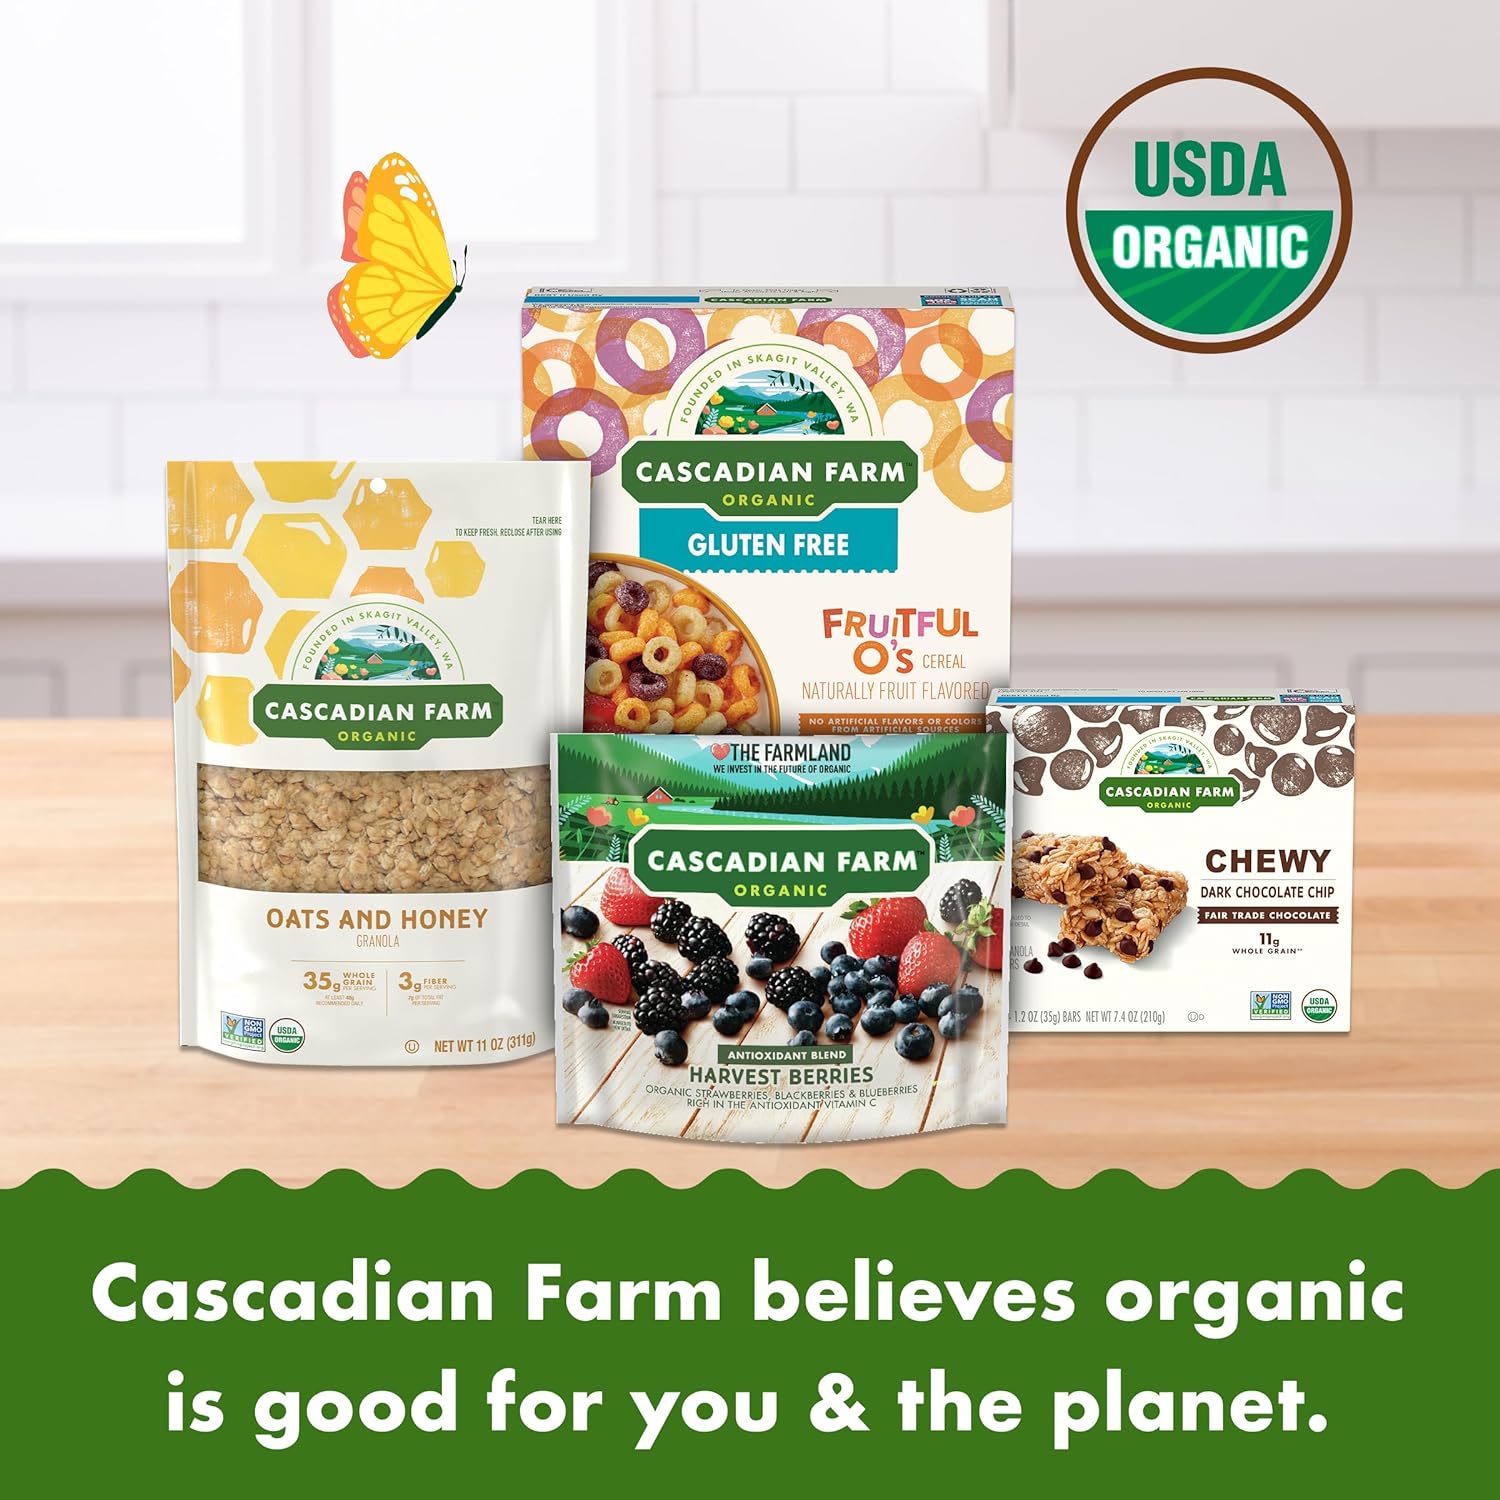 Cascadian Farm Organic Cinnamon Crunch Cereal, Value Size, 14.5 oz